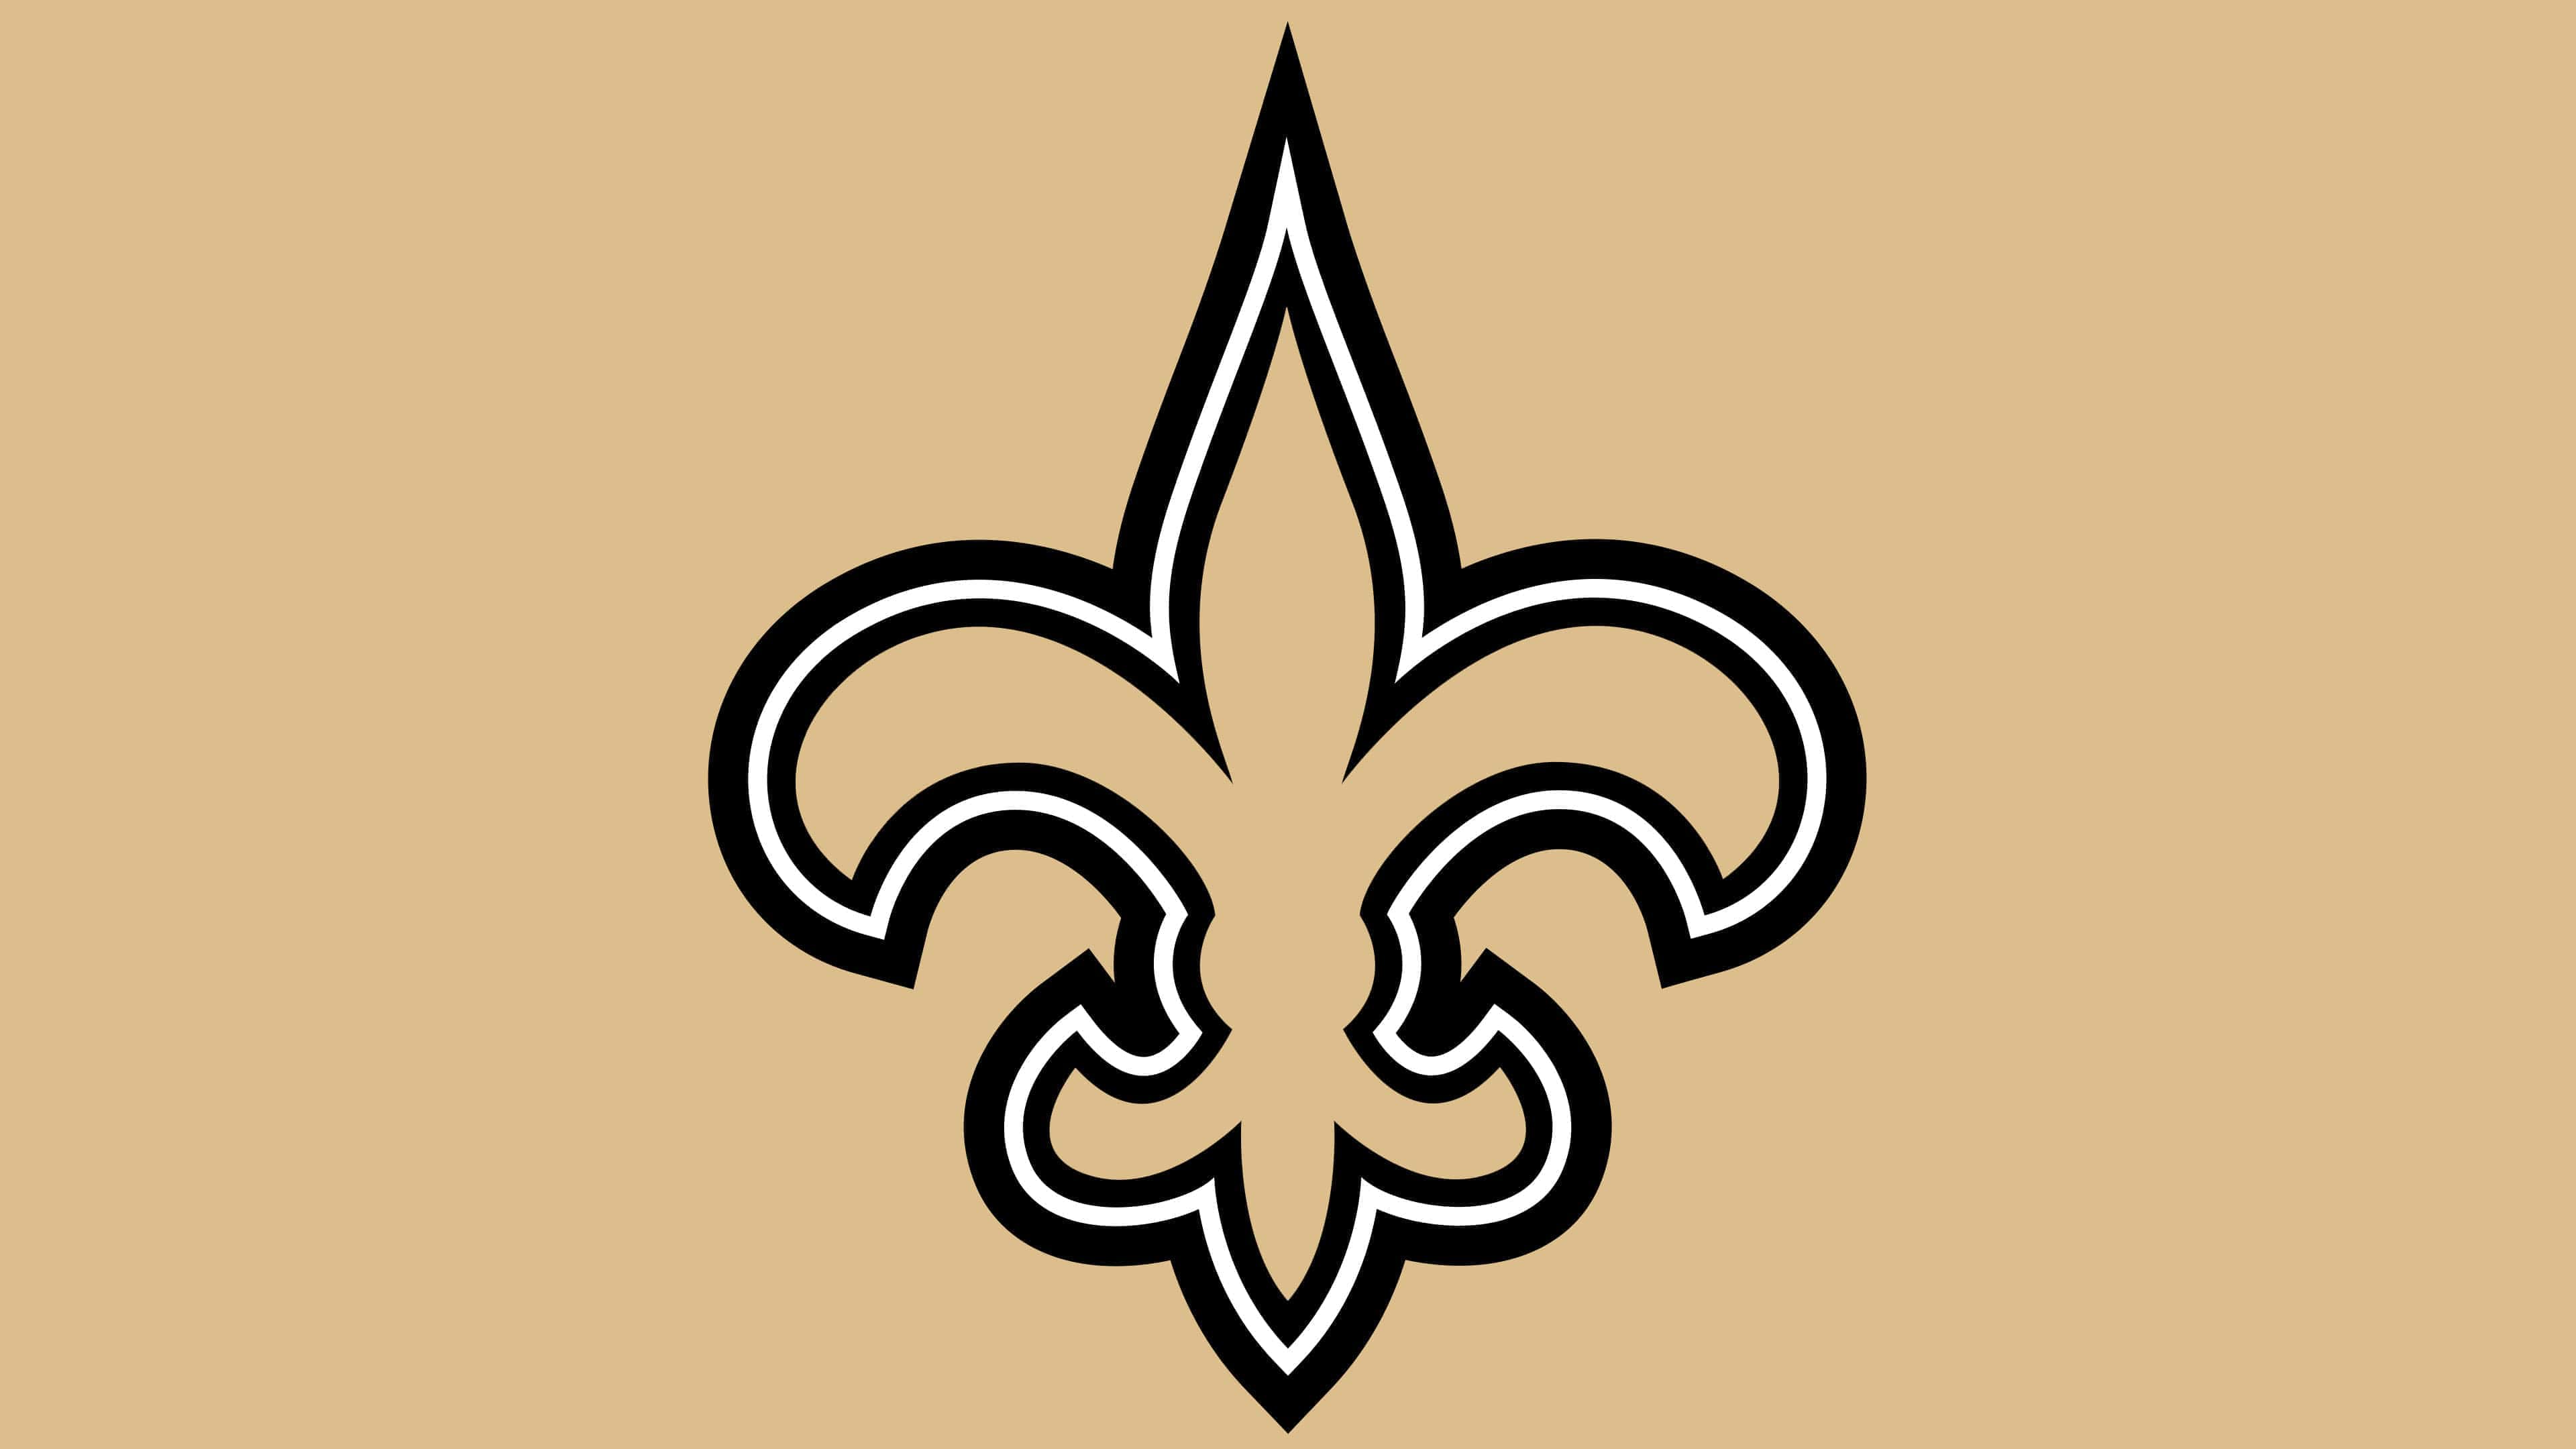 Symbols Of New Orleans - Design Talk